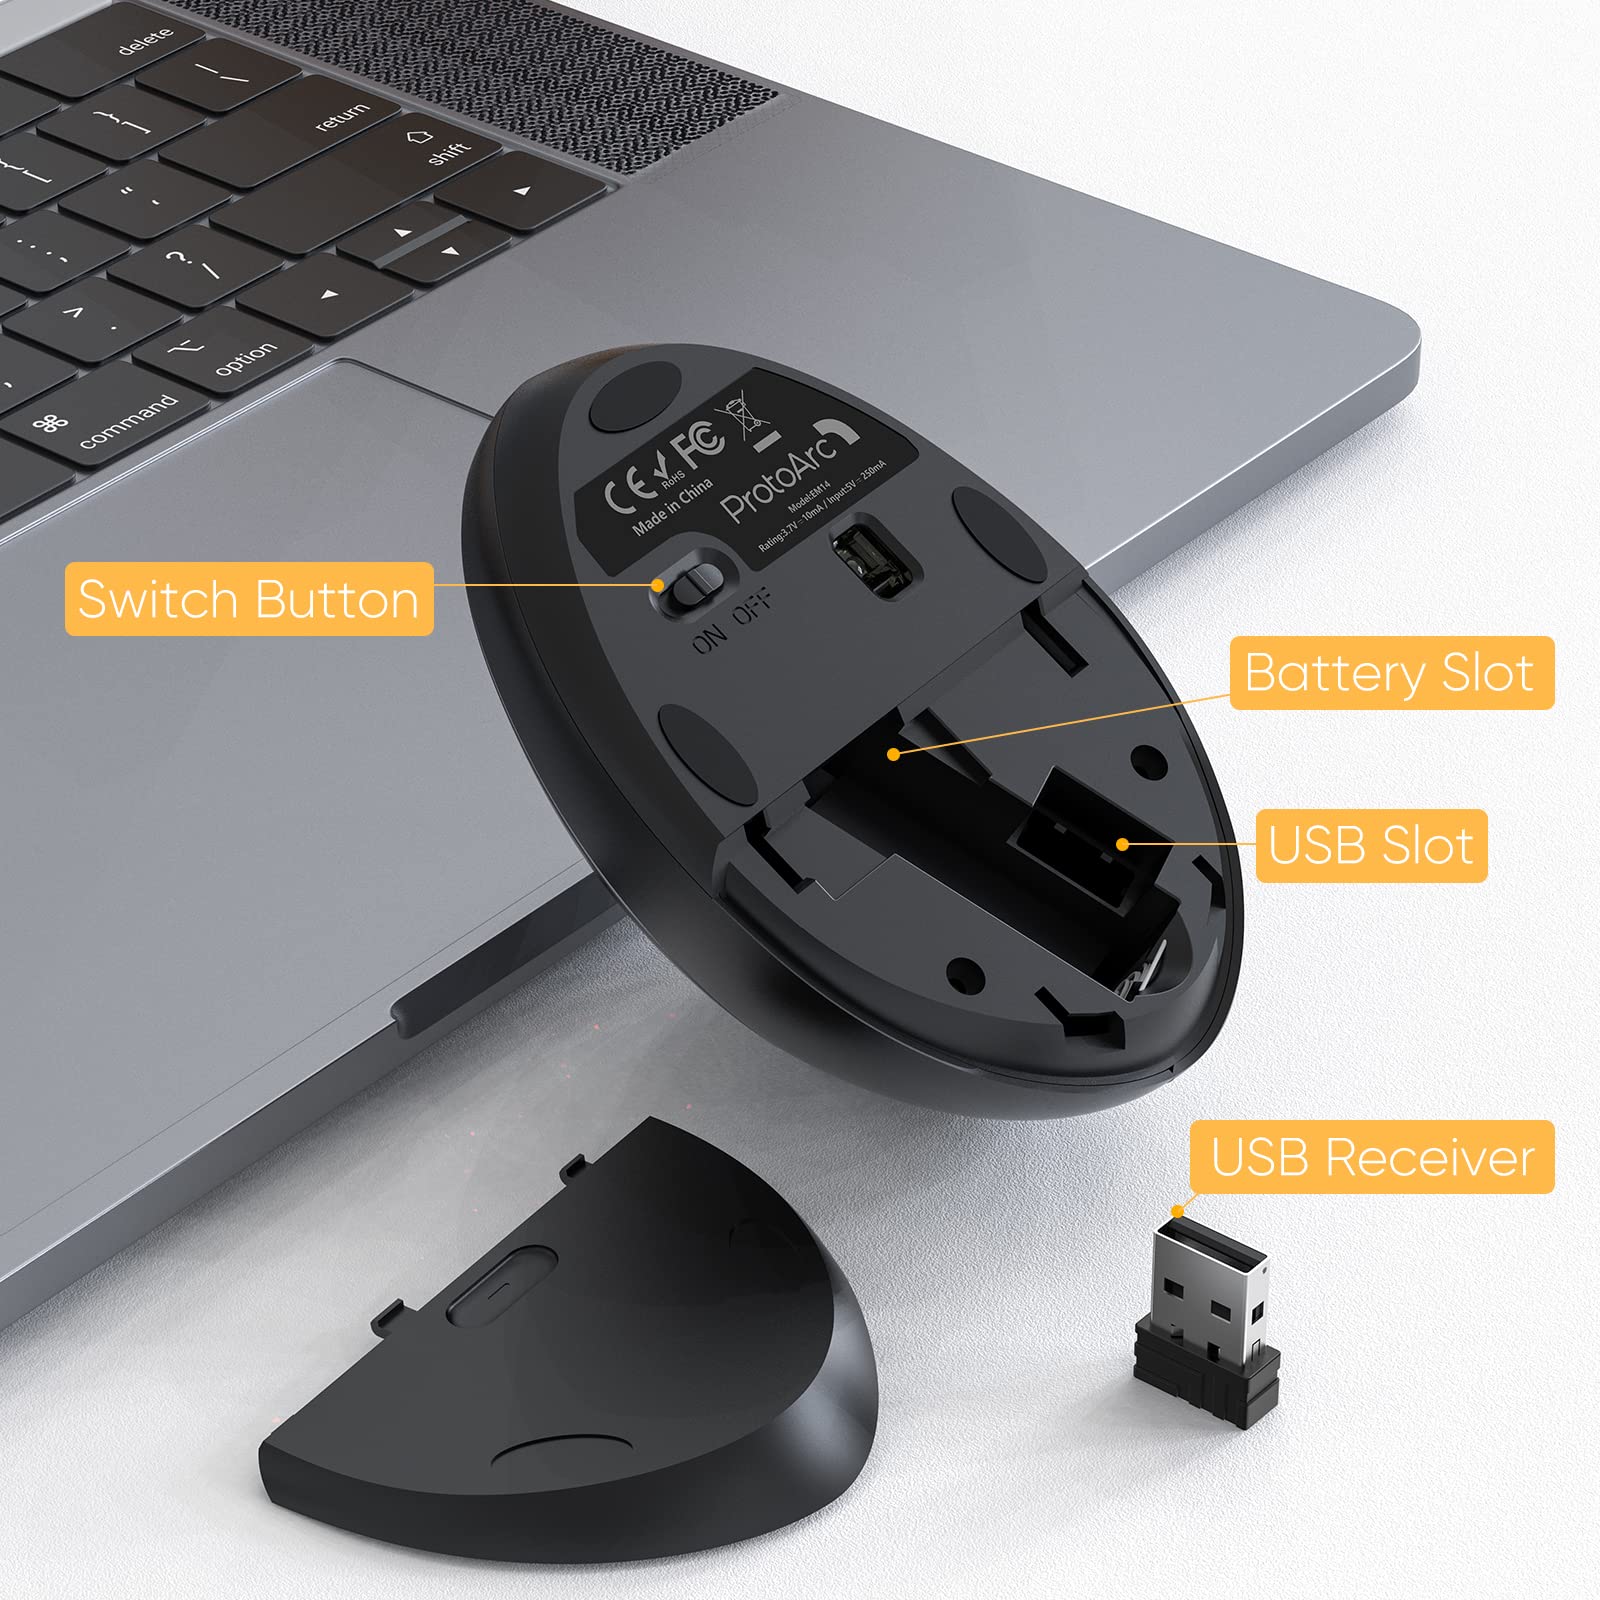 ProtoArc Backlit Wireless Ergonomic Keyboard & ProtoArc Ergonomic Wireless Vertical Mouse